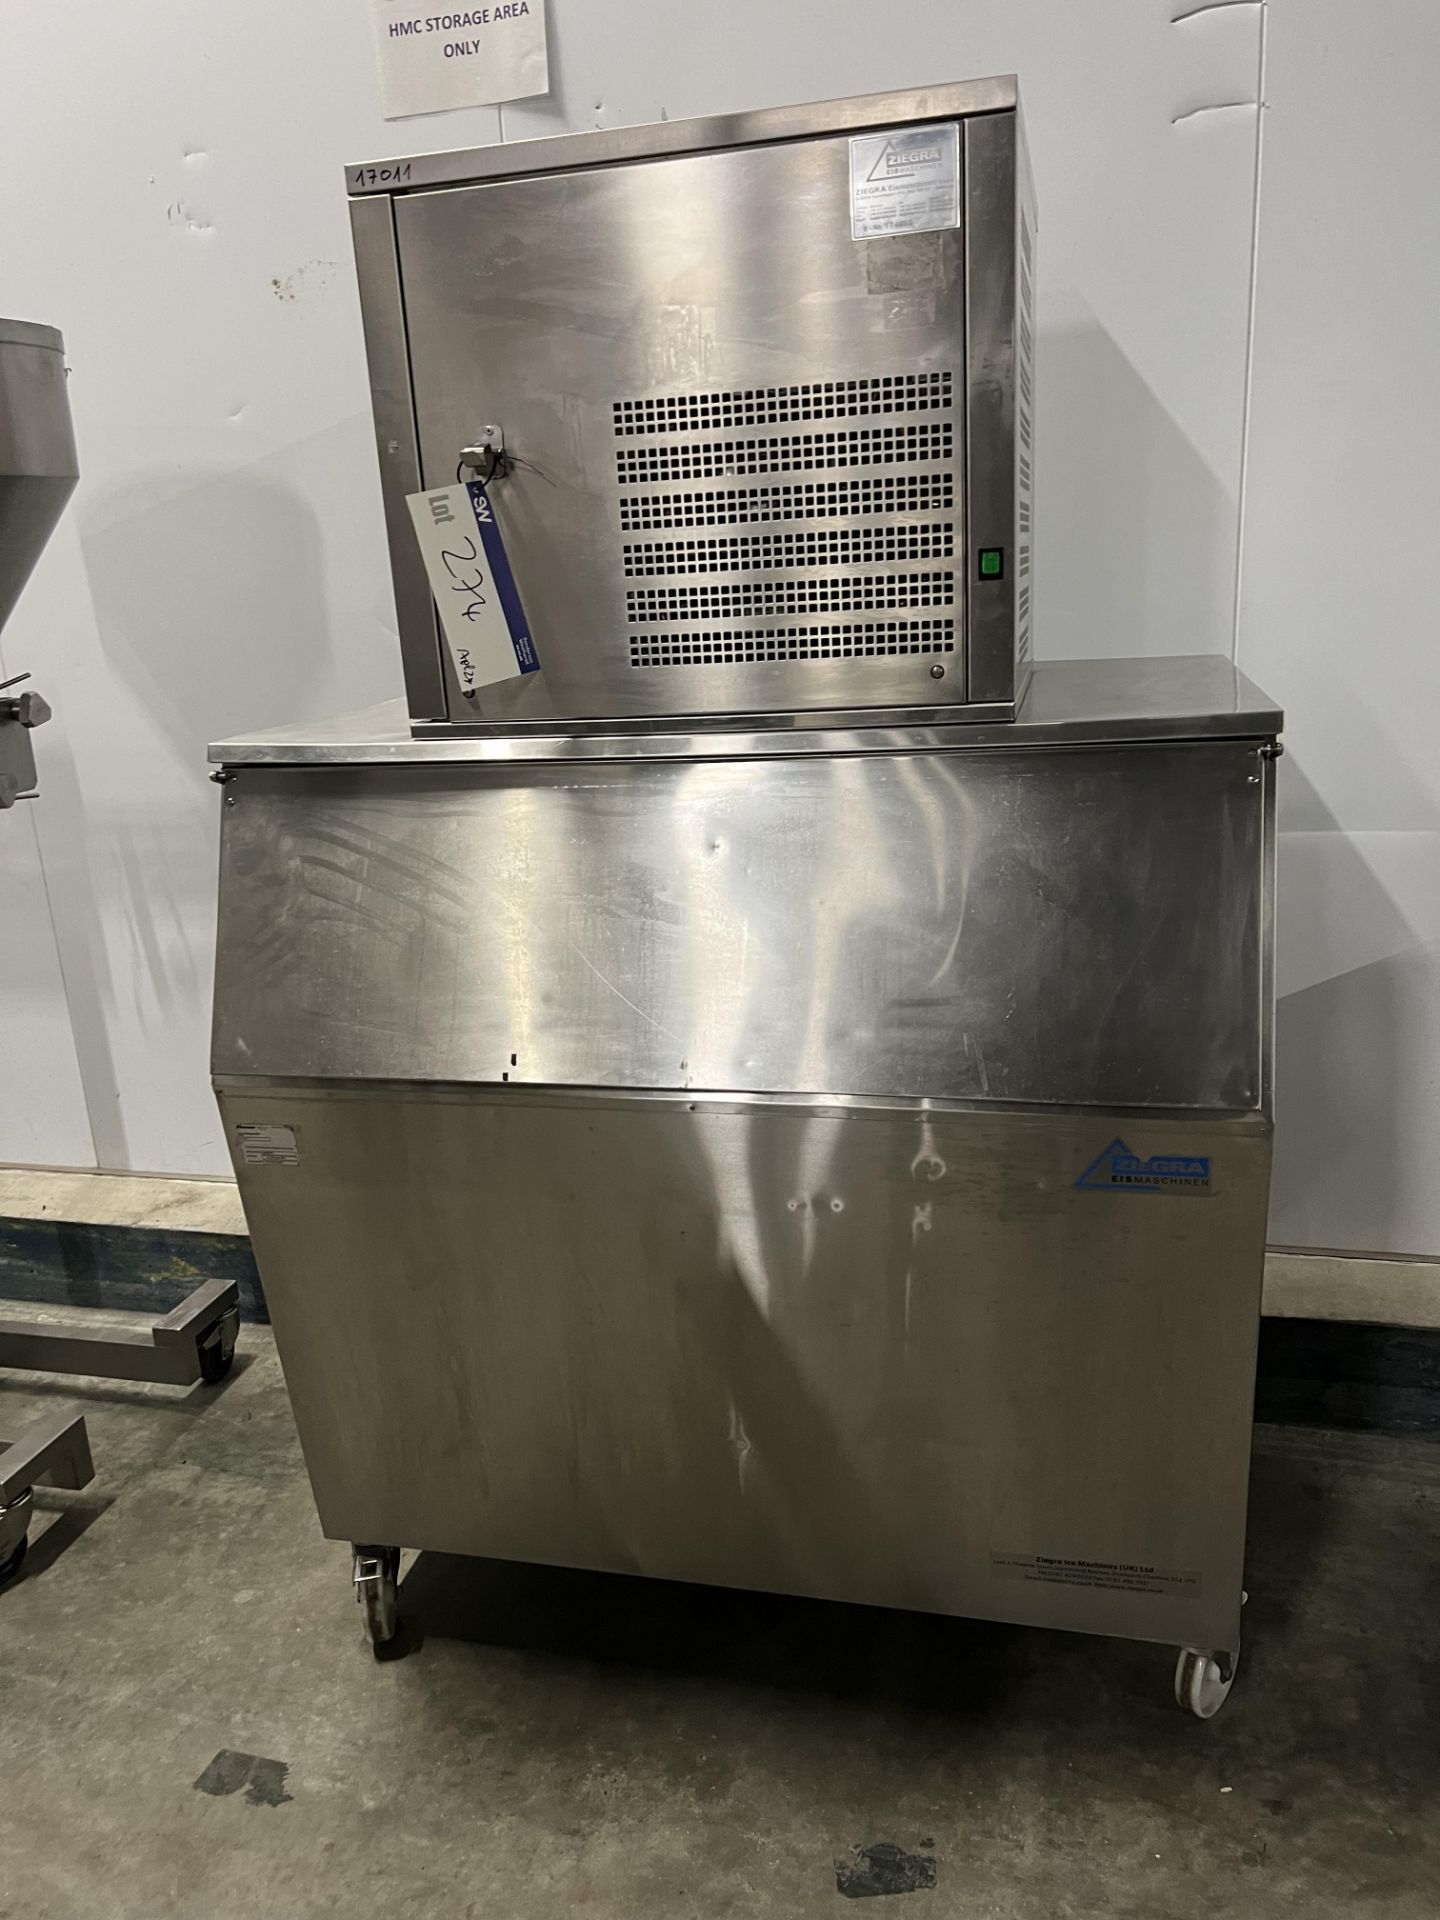 Ziegra Ice Machine, with Follett storage bin below, approx. 1.2m x 0.9m x 1.9m high, lift out charge